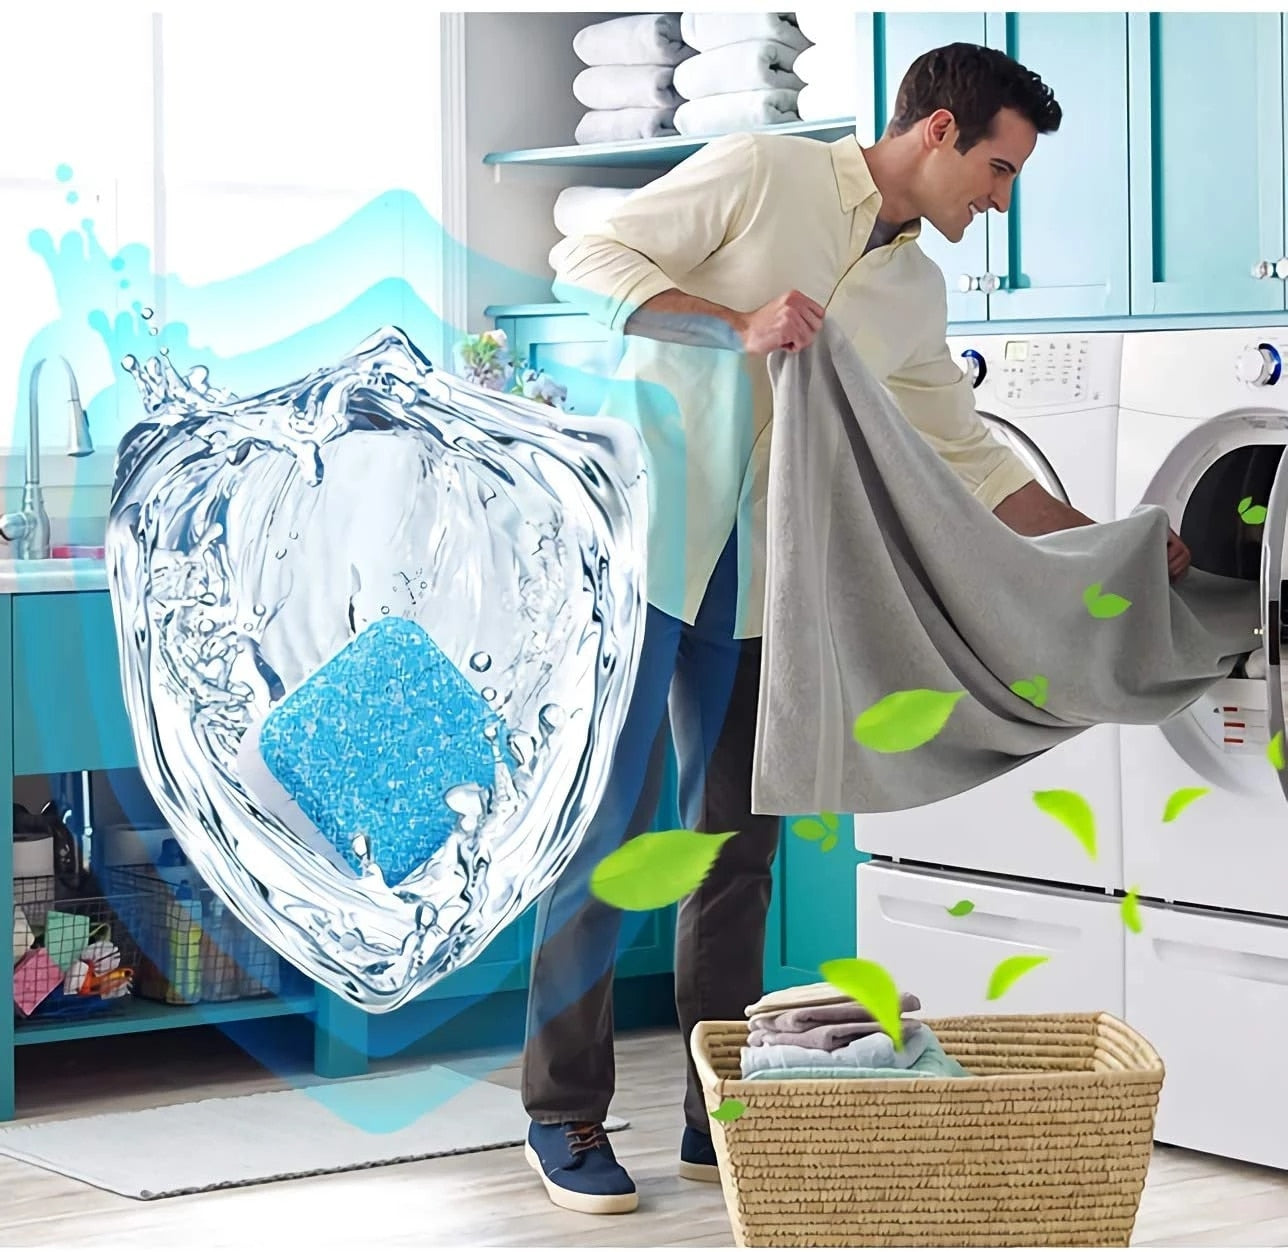 Washing Machine Cleaner Effervescent Tablets Deep Cleaning Efficient Sterilize Mildew Deodorant Remove Stains Home Detergent